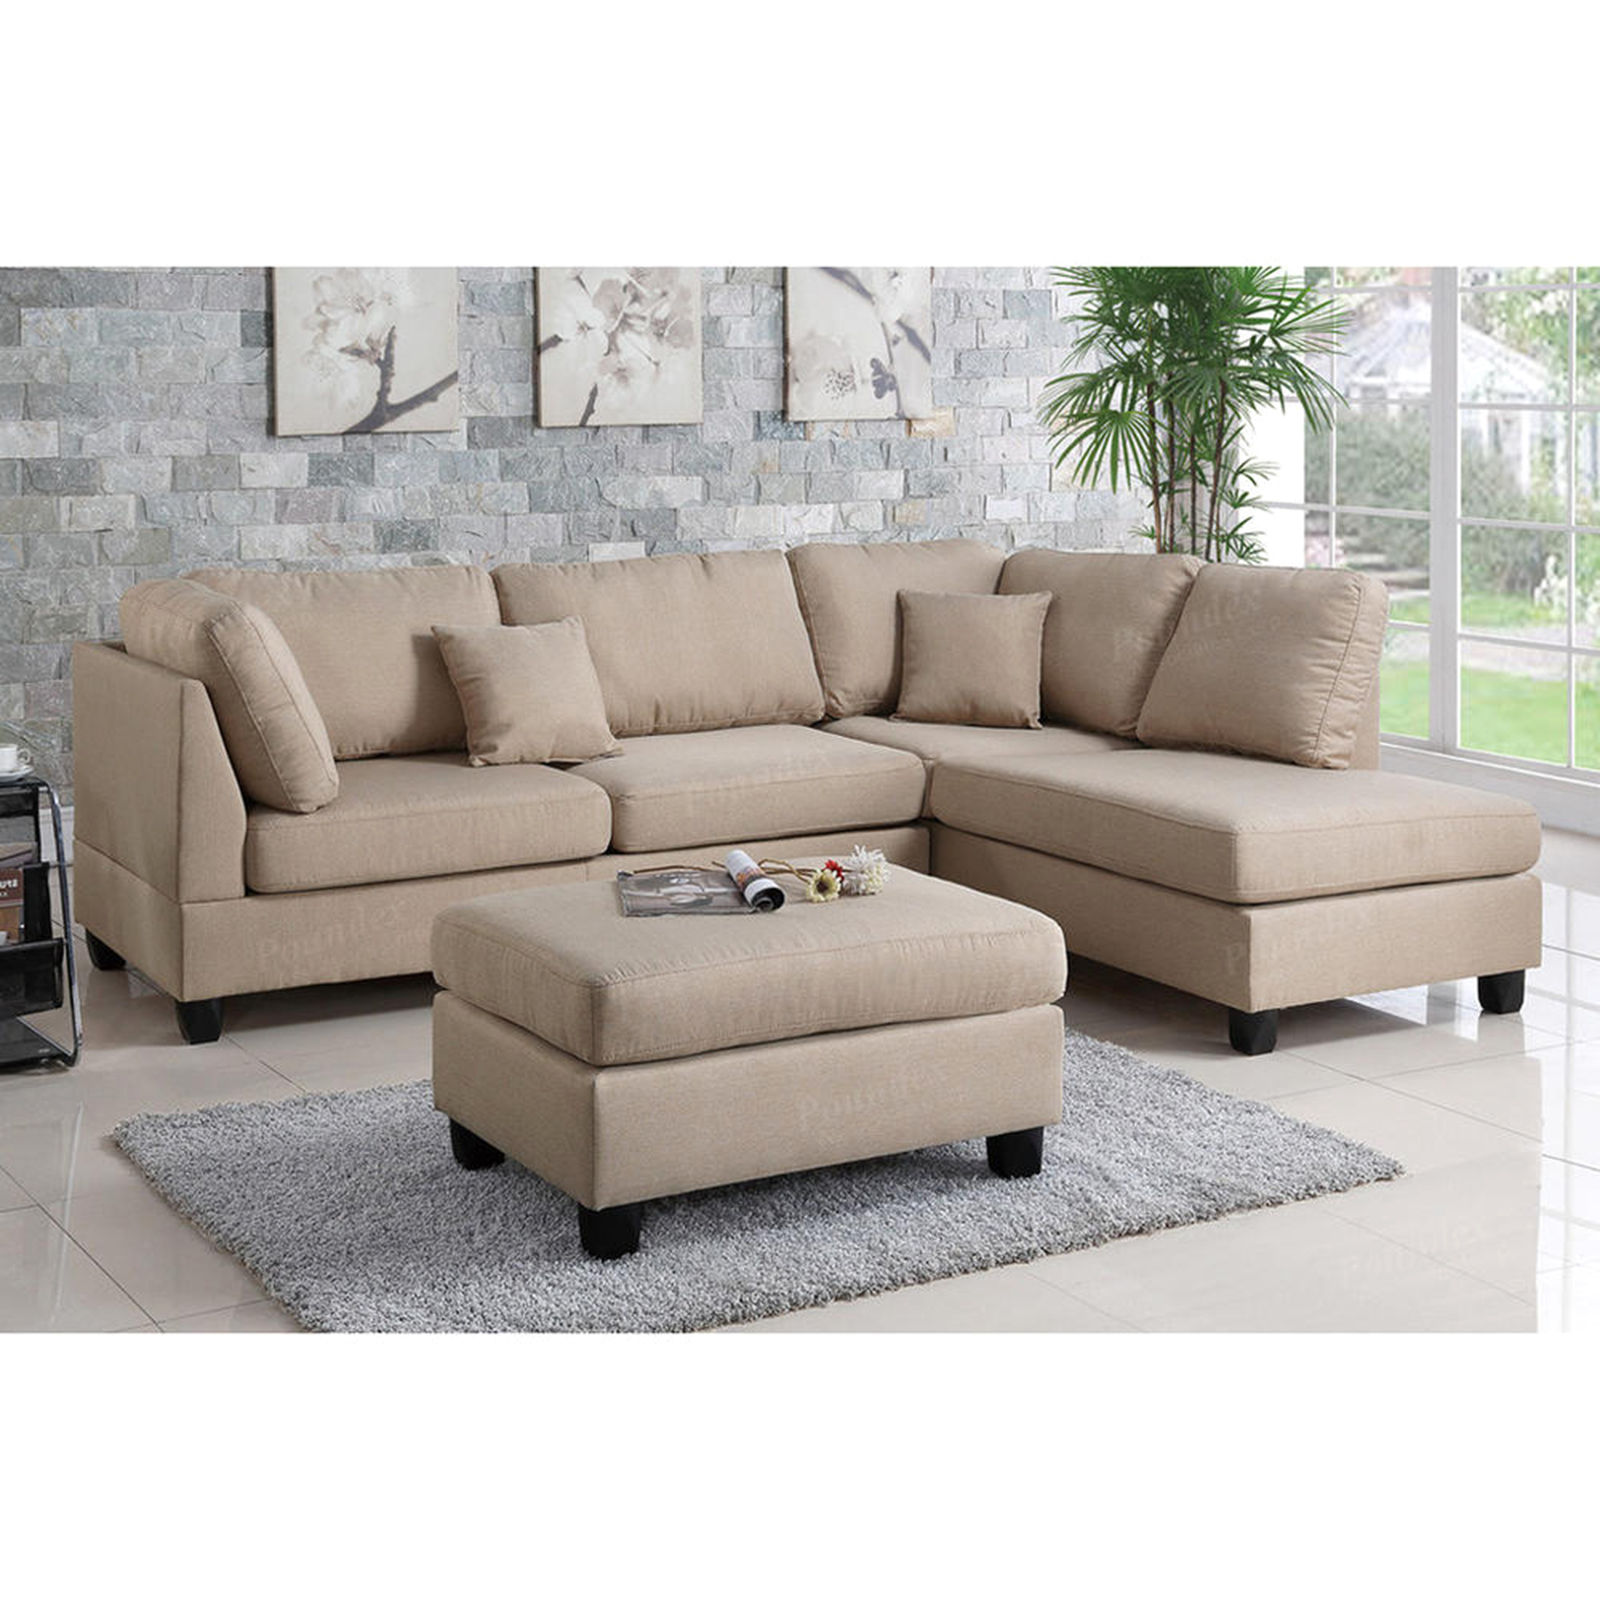 Esofastore 3pc. Reversible Fabric Sectional Sofa Set - Sand